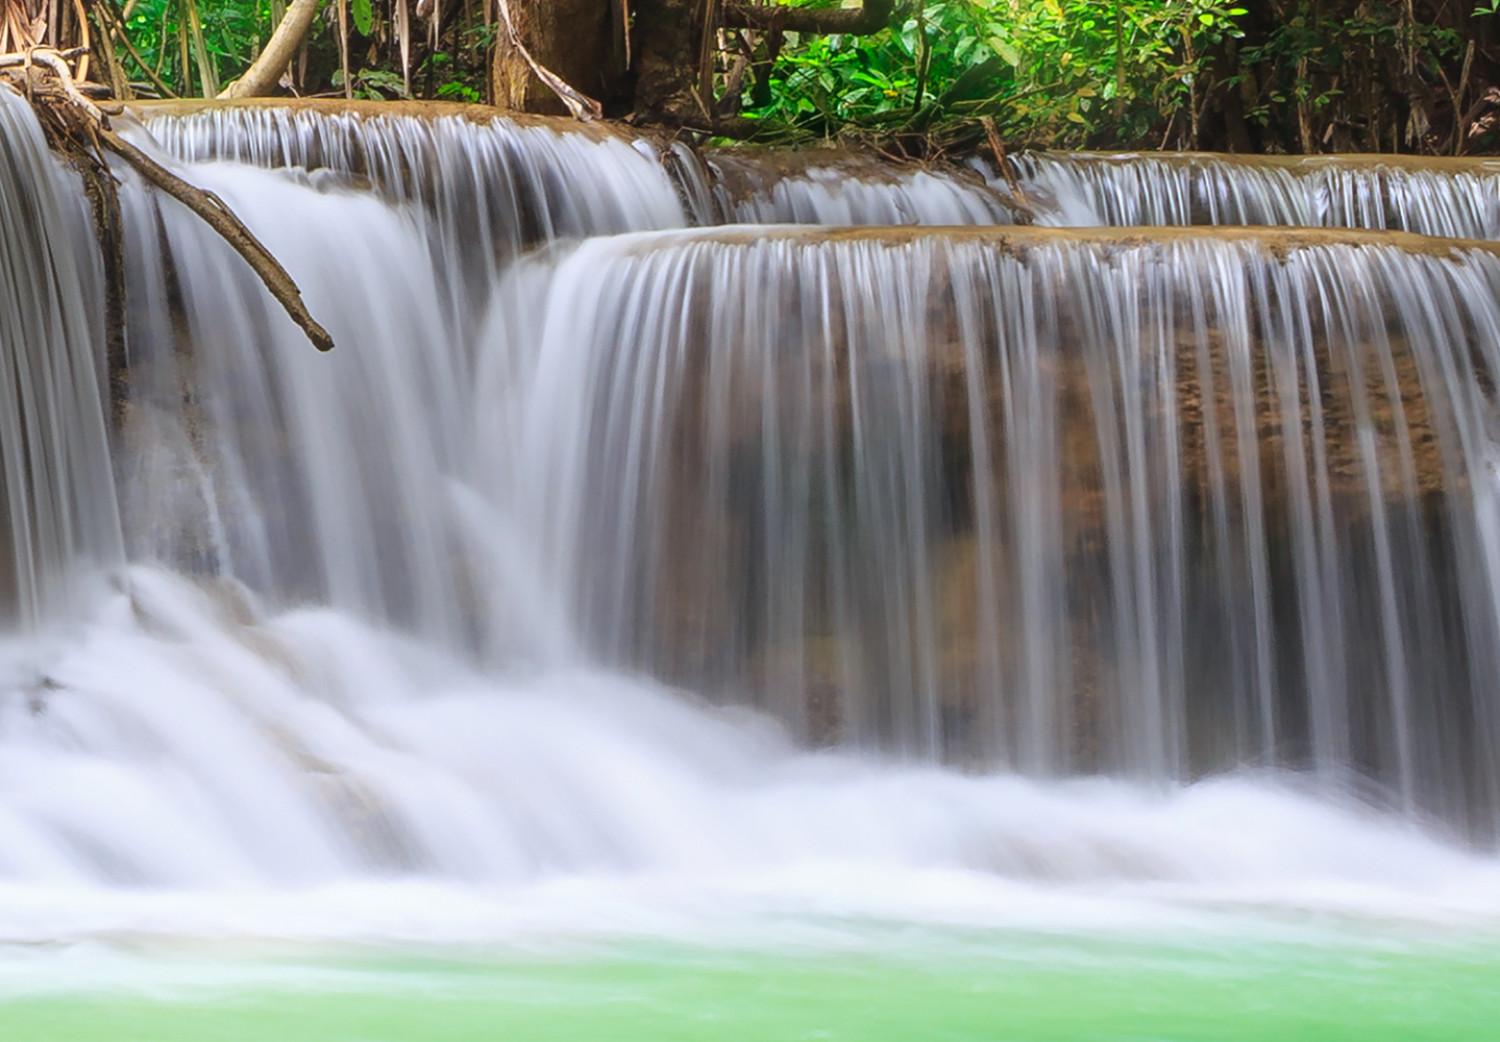 Canvas Waterfall in Kanjanaburi (1-part) wide - landscape of wild nature